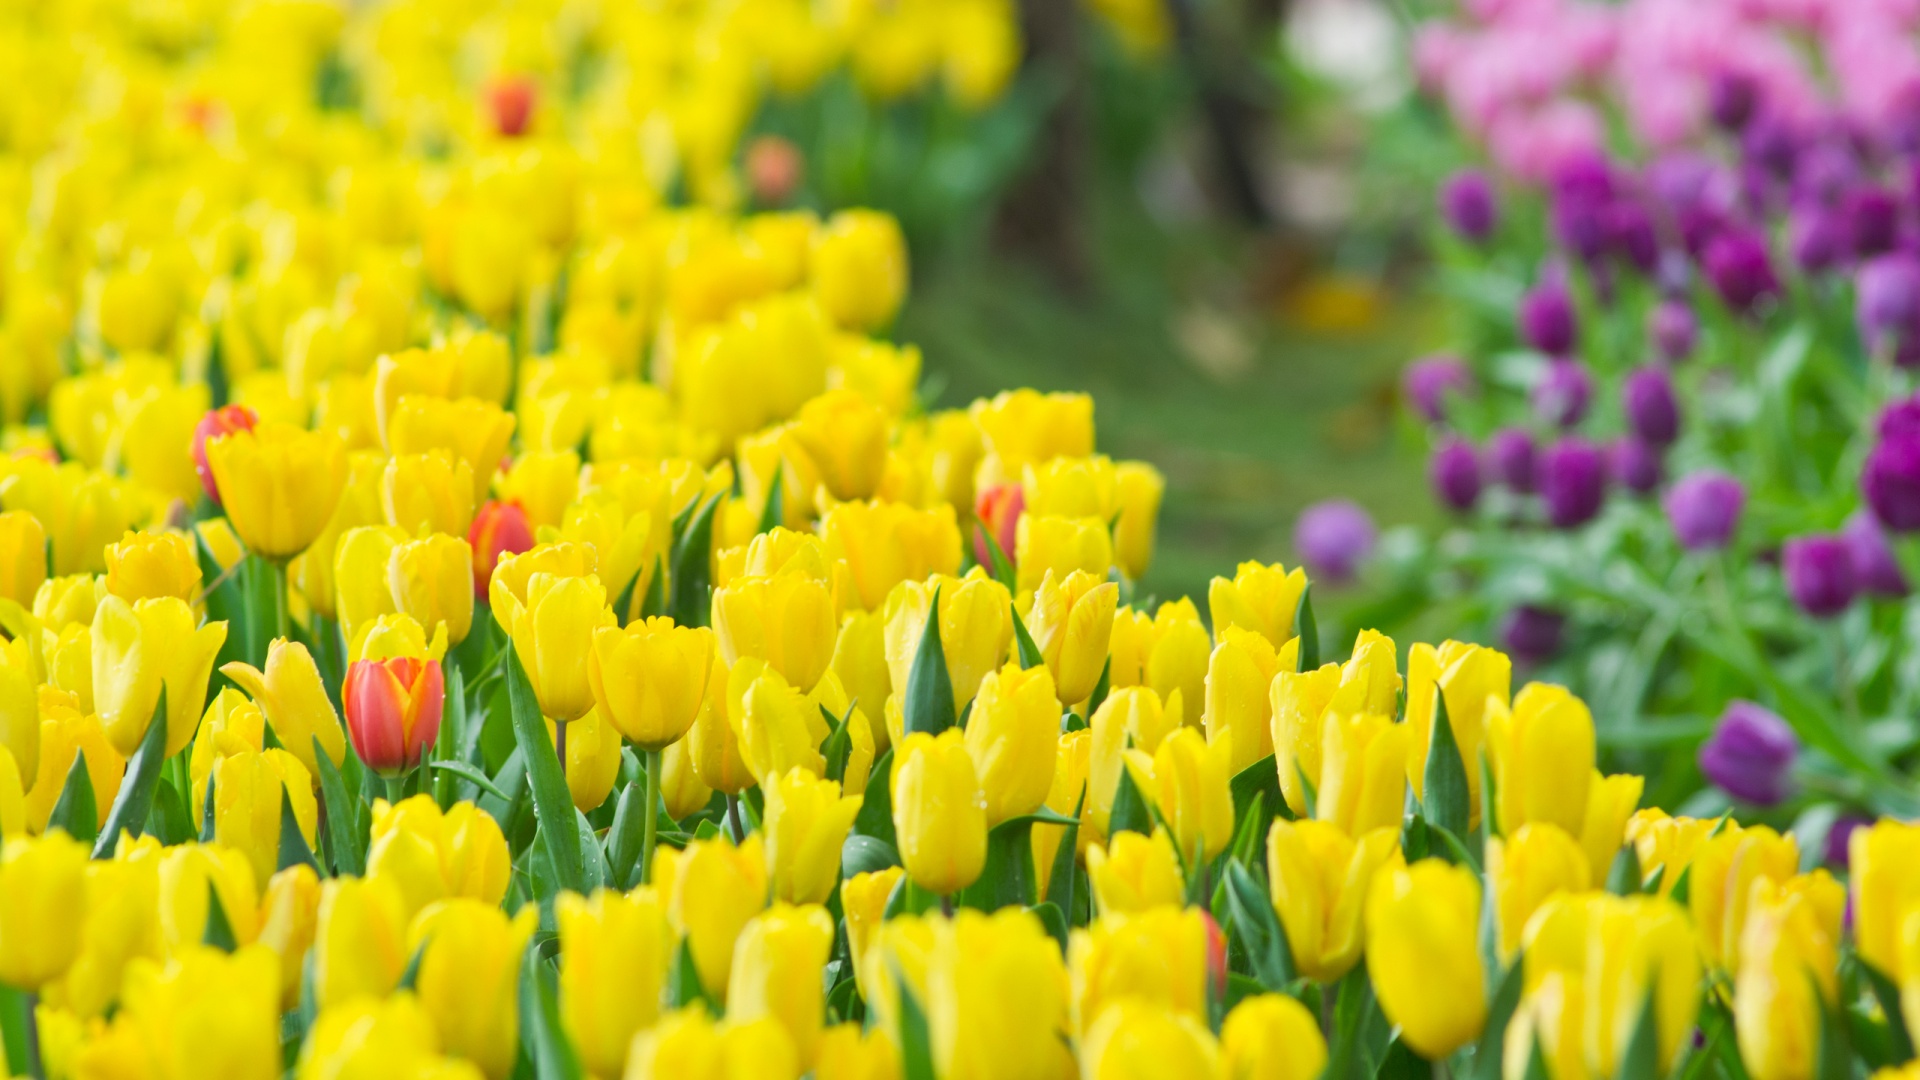 gelbe tulpentapete,blume,blühende pflanze,blütenblatt,tulpe,gelb